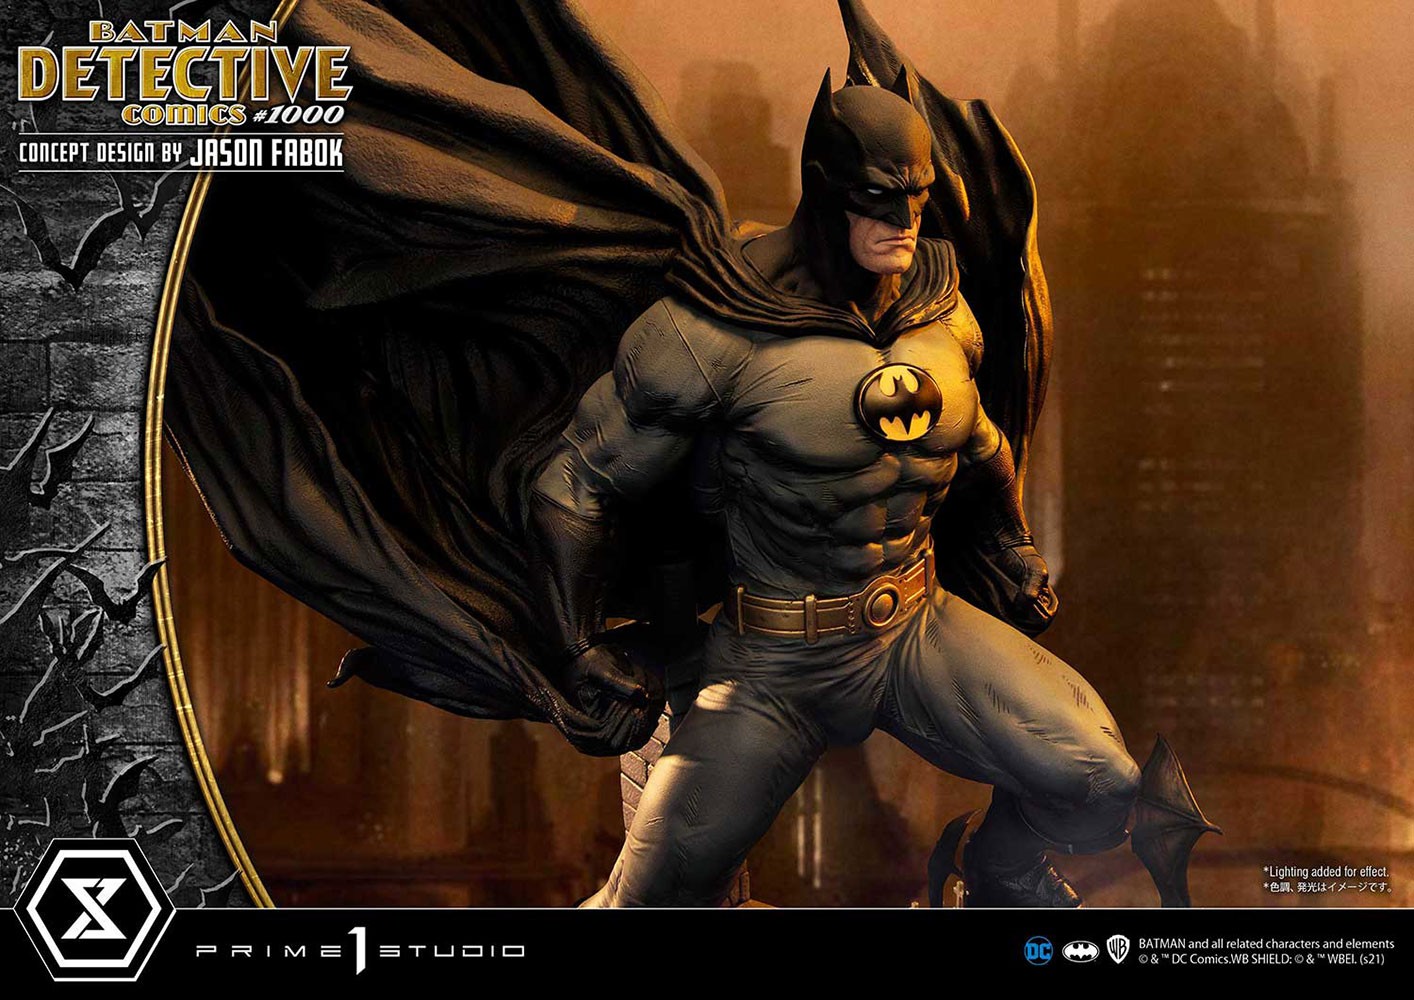 Batman Detective Comics #1000 Collector Edition (Prototype Shown) View 39